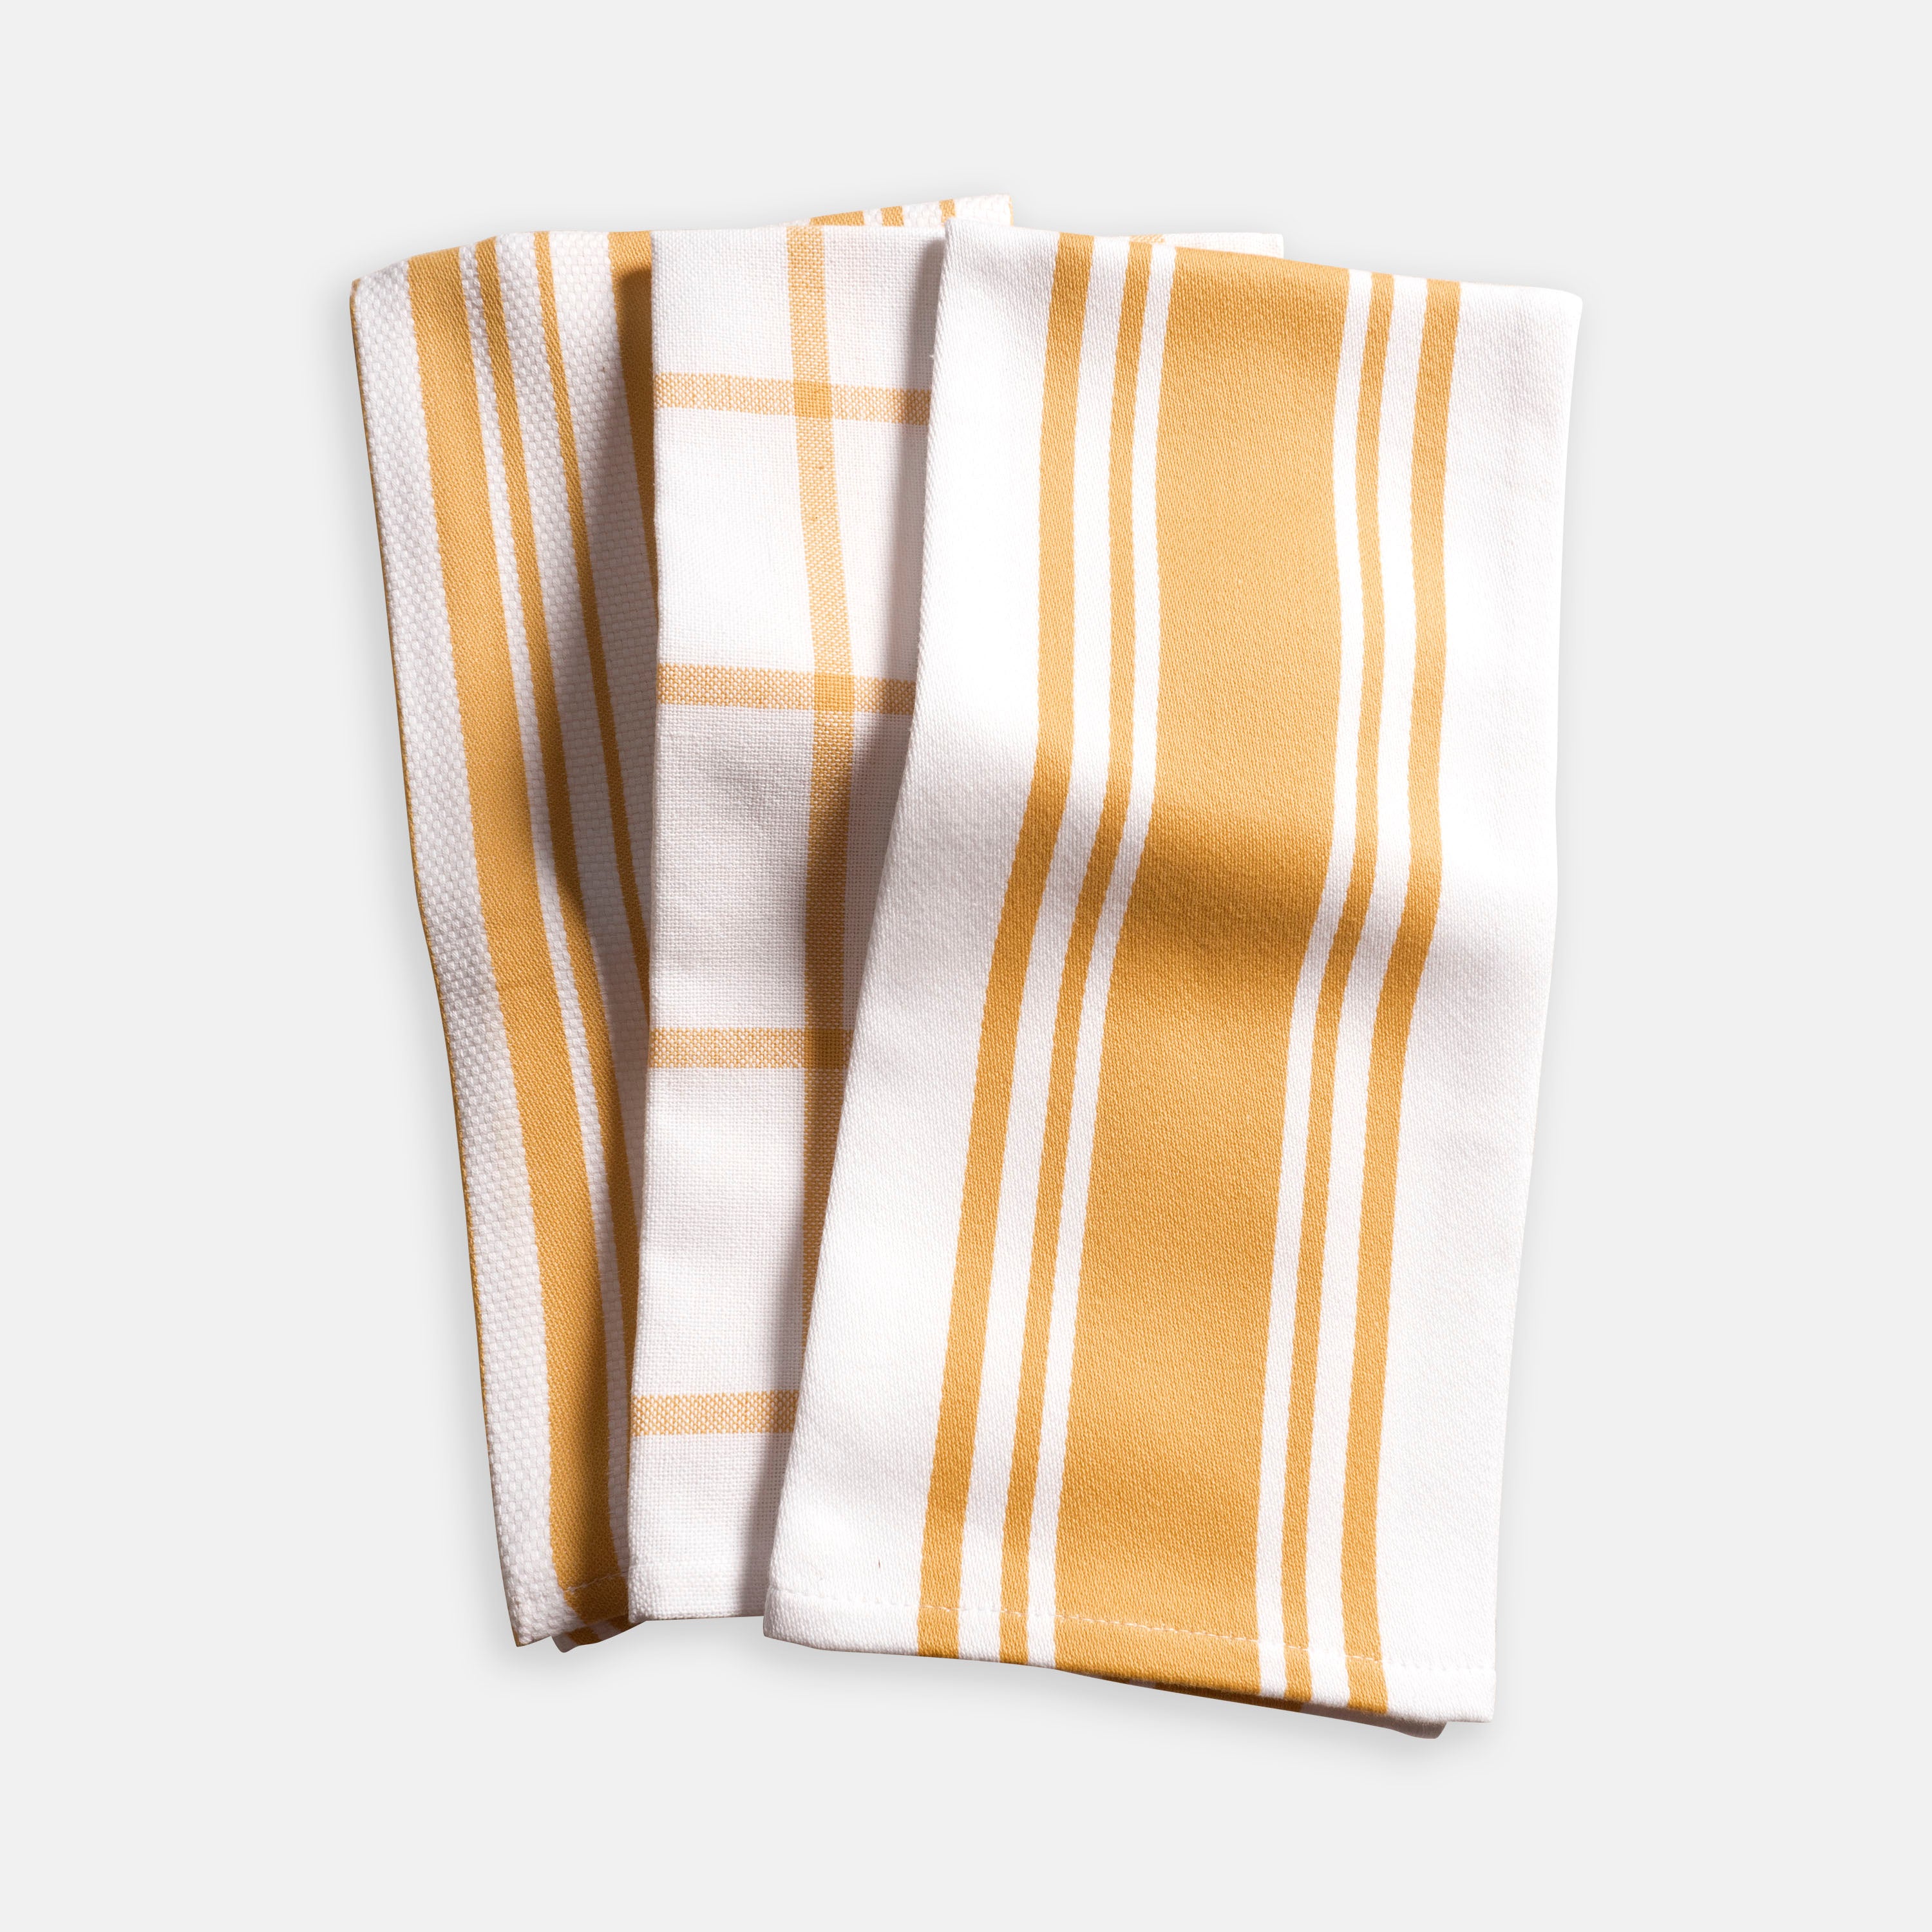 Williams-Sonoma Classic Striped Towels, Cotton,Set of 4 (Drizzle)